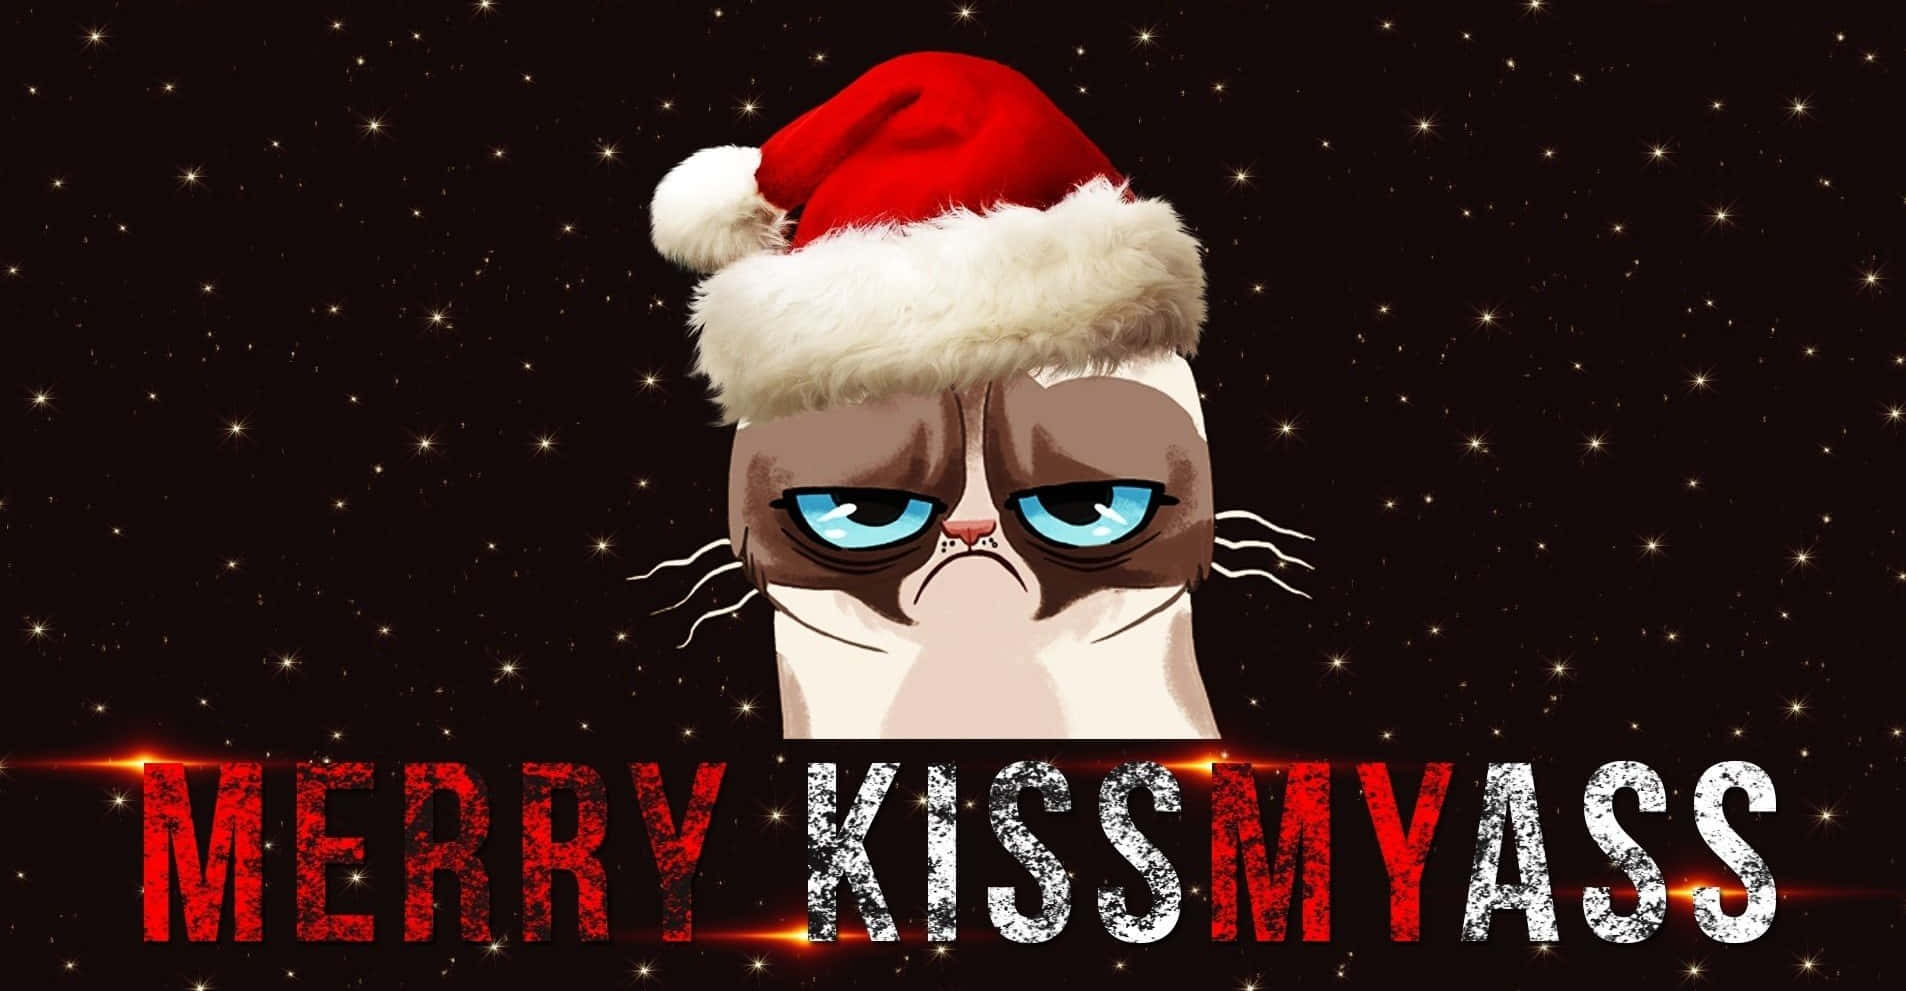 A Grumpy Cat Wearing A Santa Hat